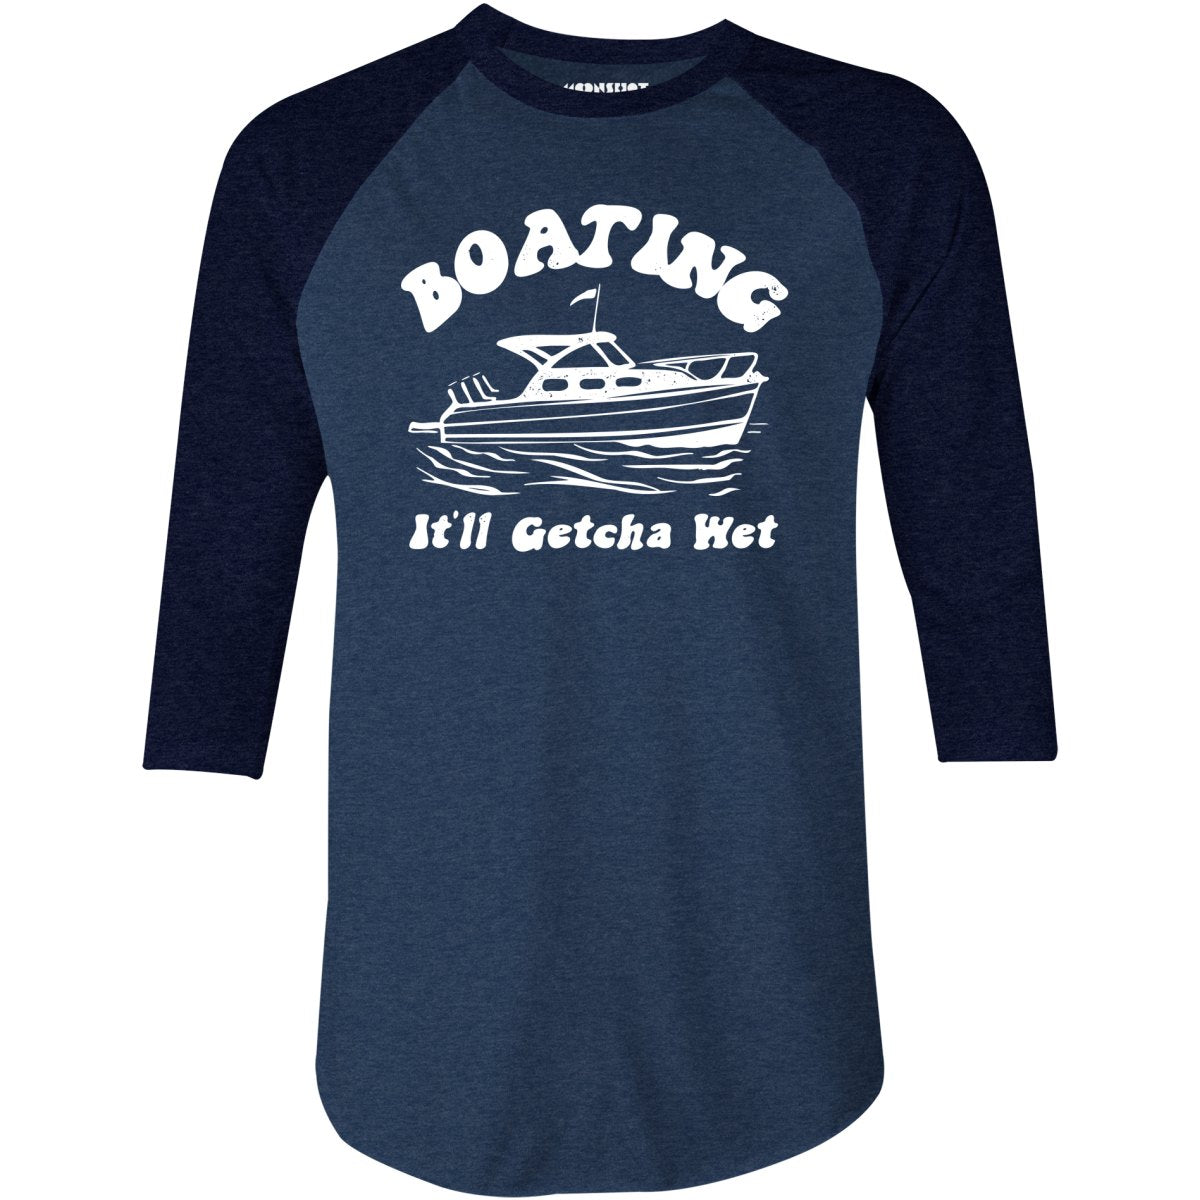 Boating It'll Getcha Wet - 3/4 Sleeve Raglan T-Shirt